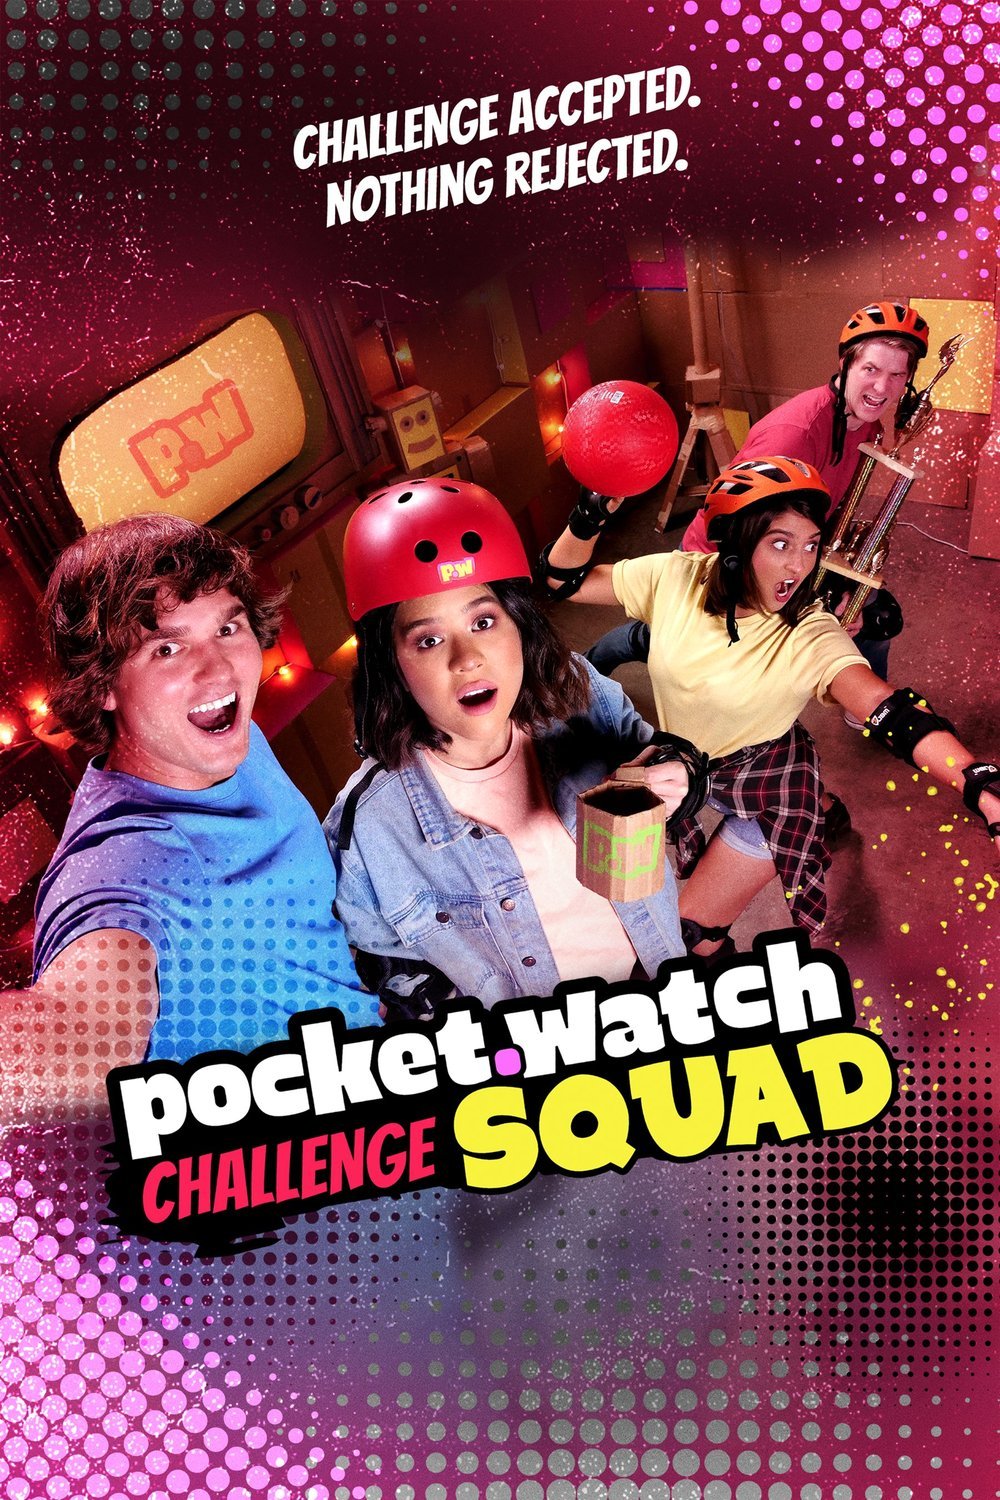 L'affiche du film pocket.watch Challenge Squad